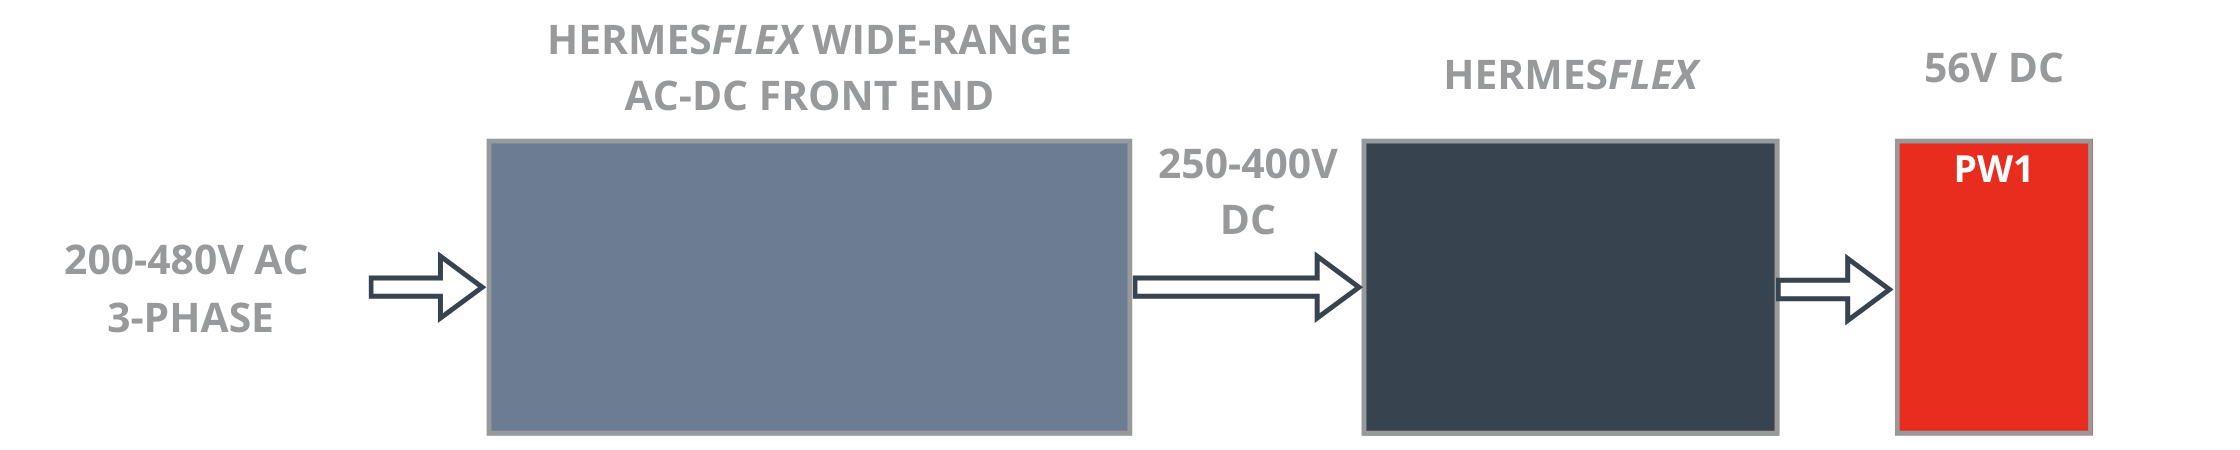 480V 3-phase AC compatible HermesFlex combo